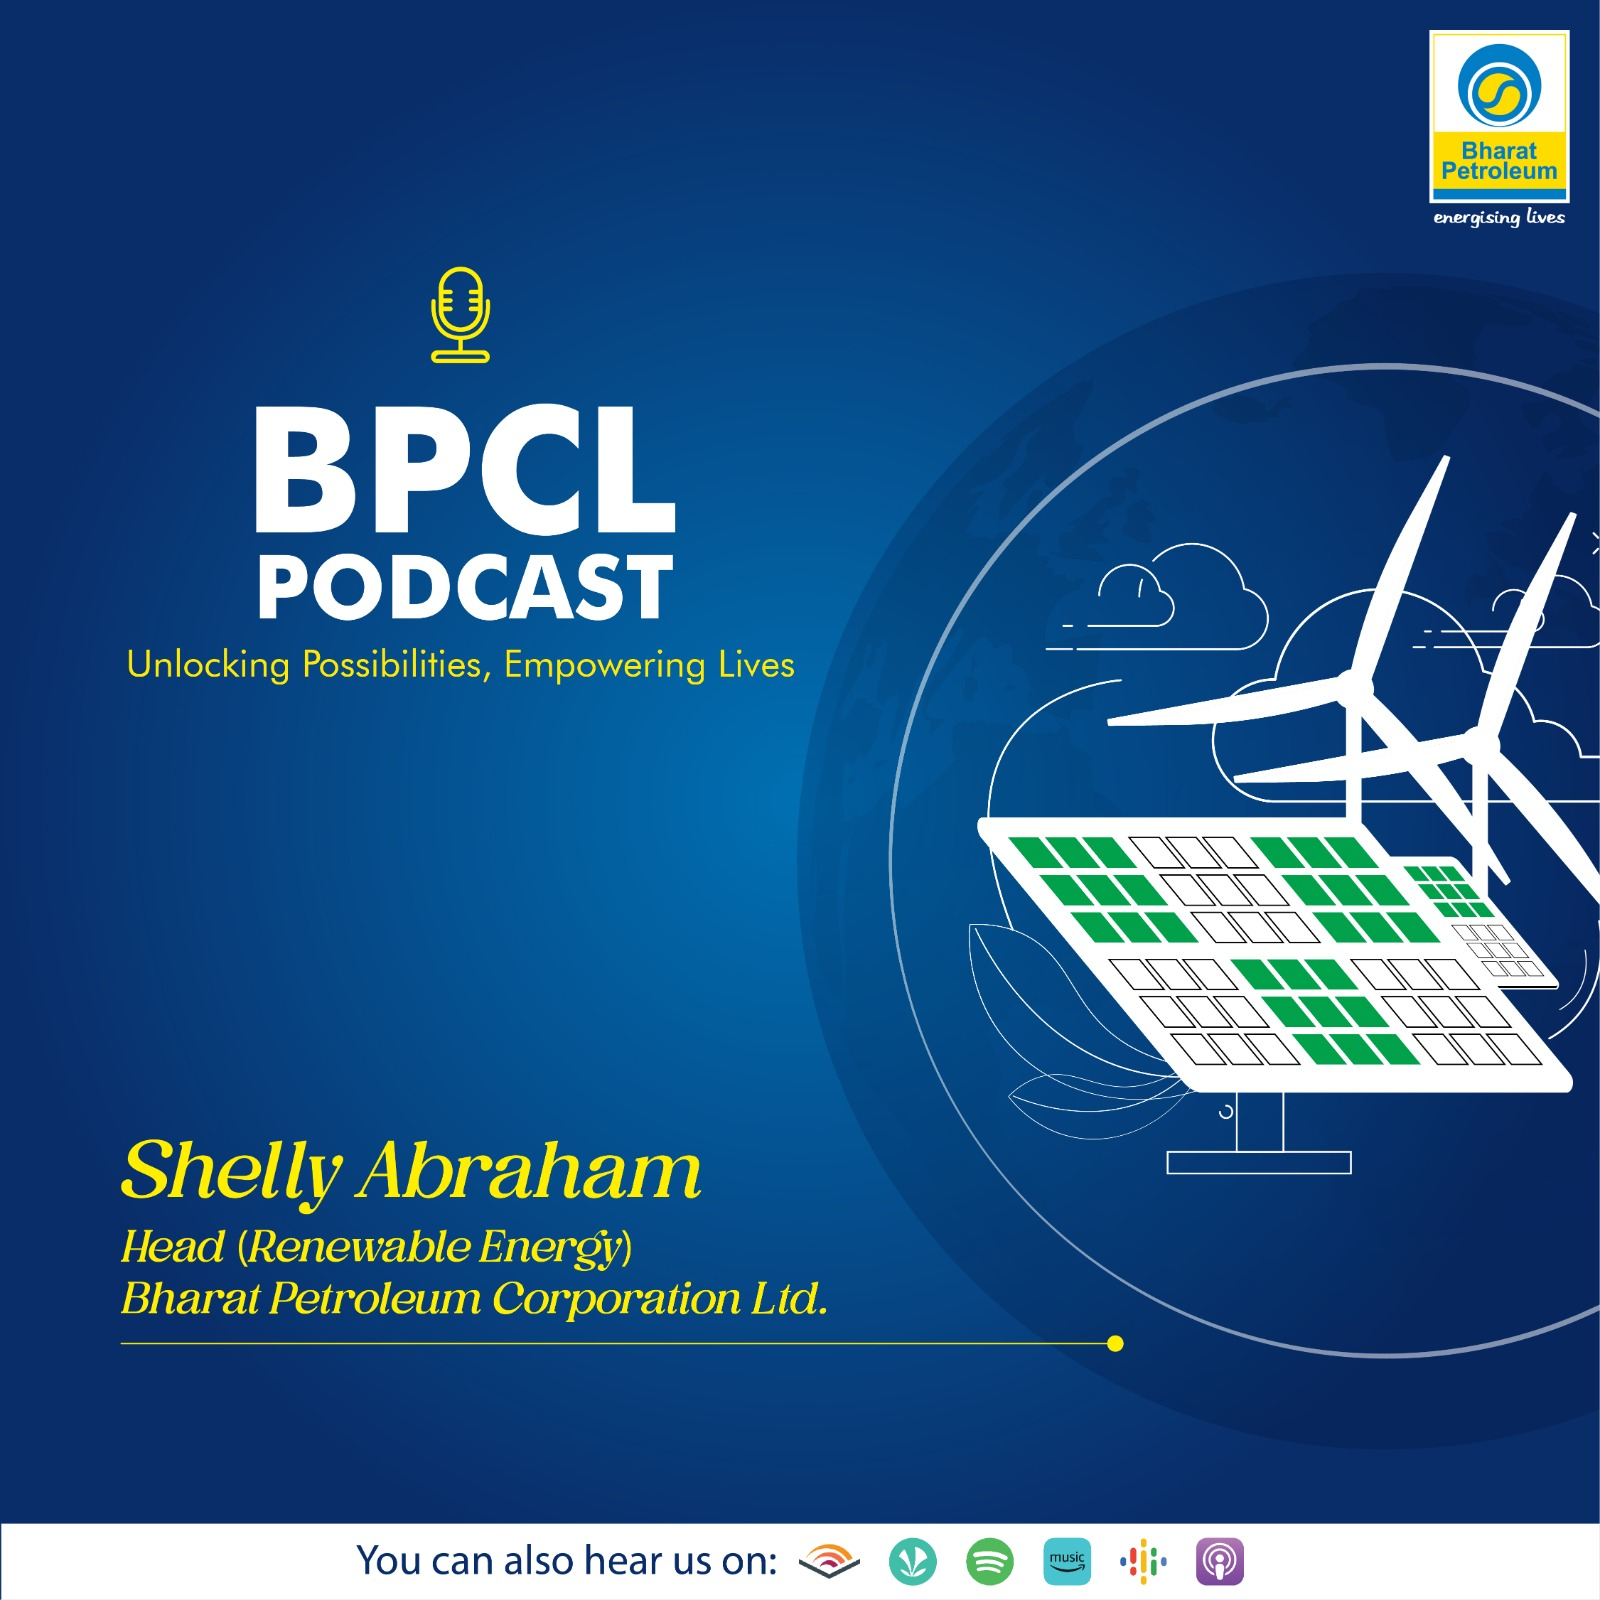 Shelly Abraham, Head, Renewable Energy Business, BPCL